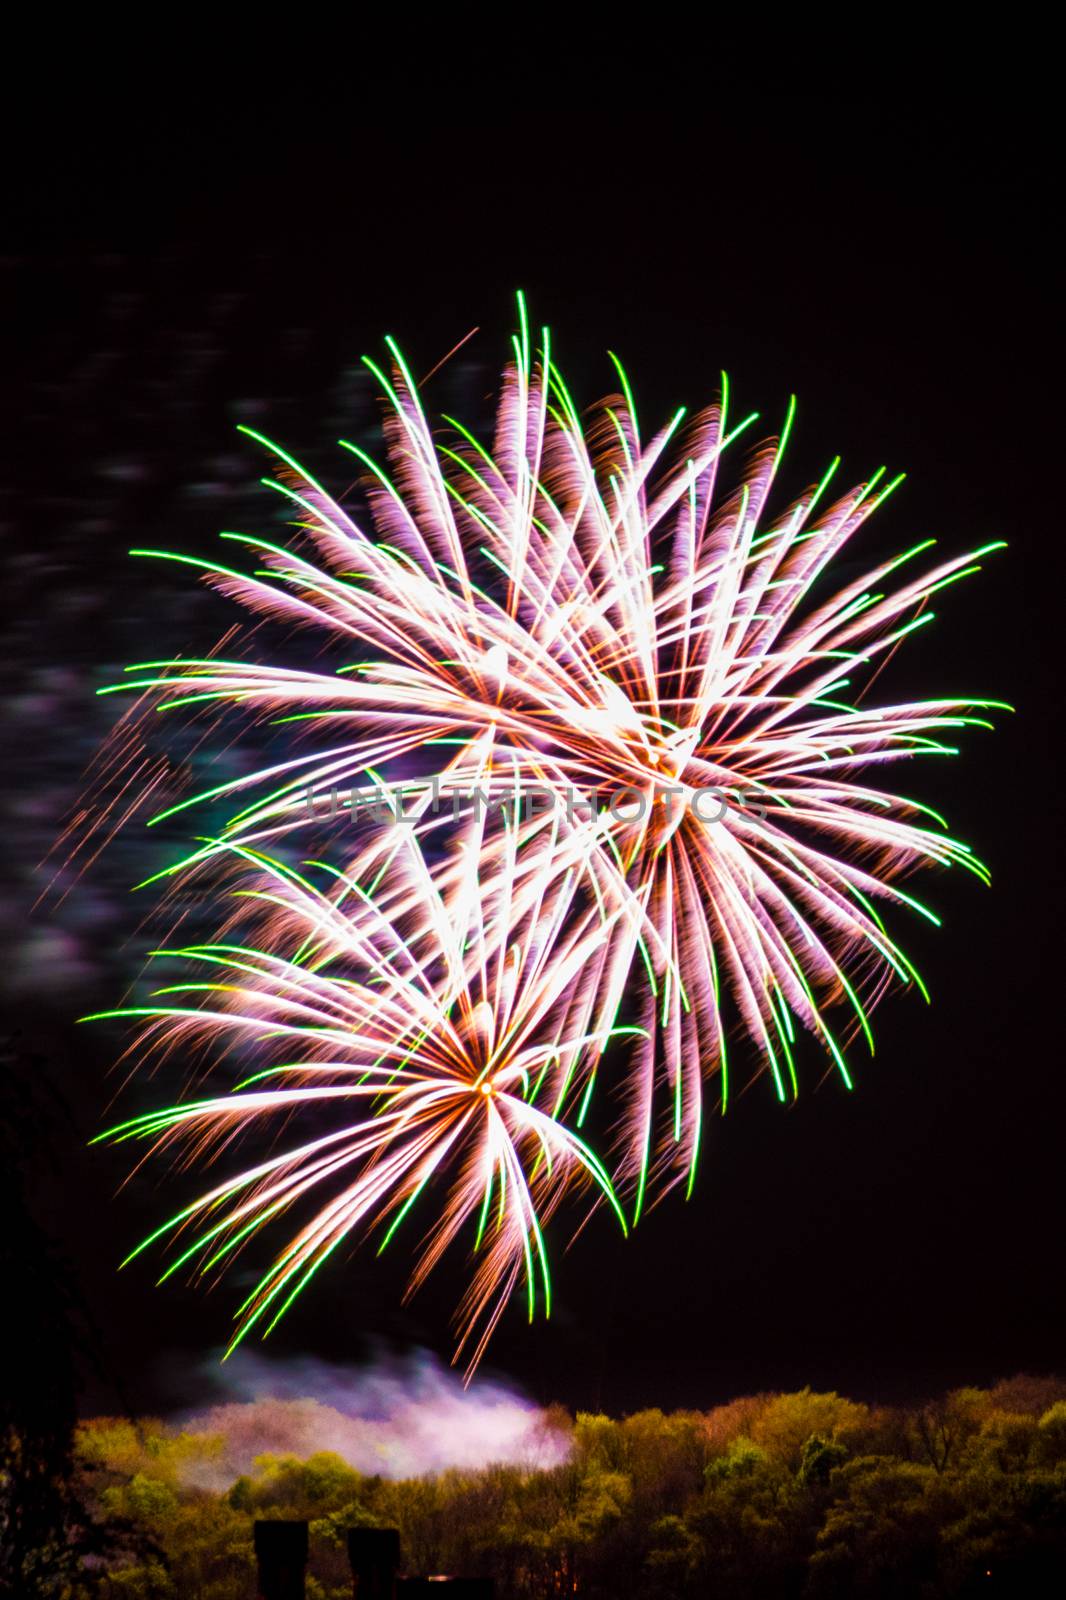 Firework fireworks celebration white purple with green peaks